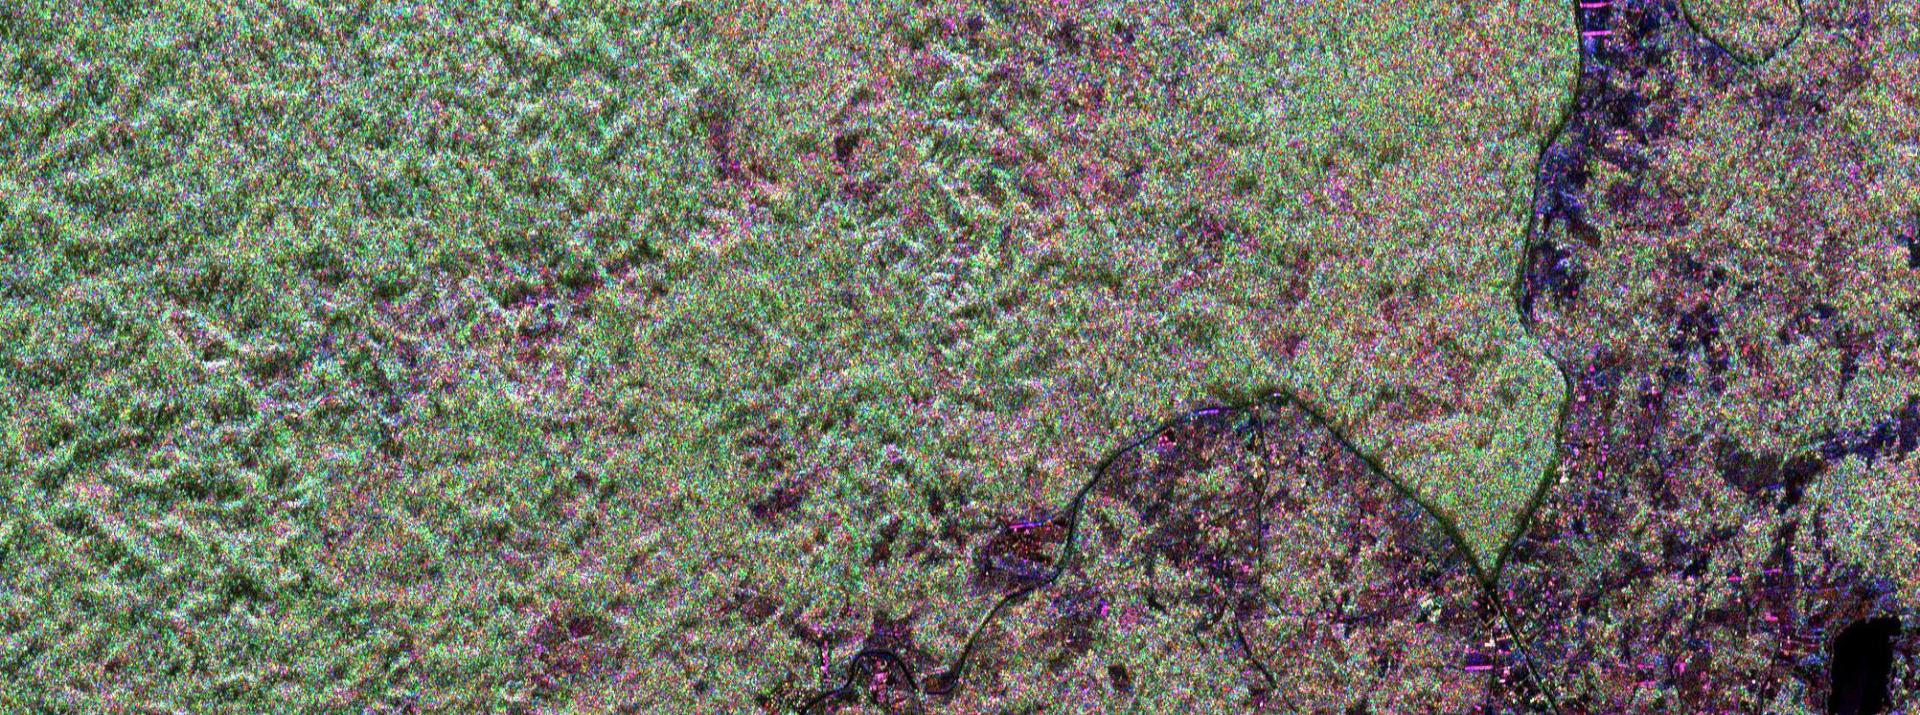 Radar image of Gabon forest  - (c) DLR